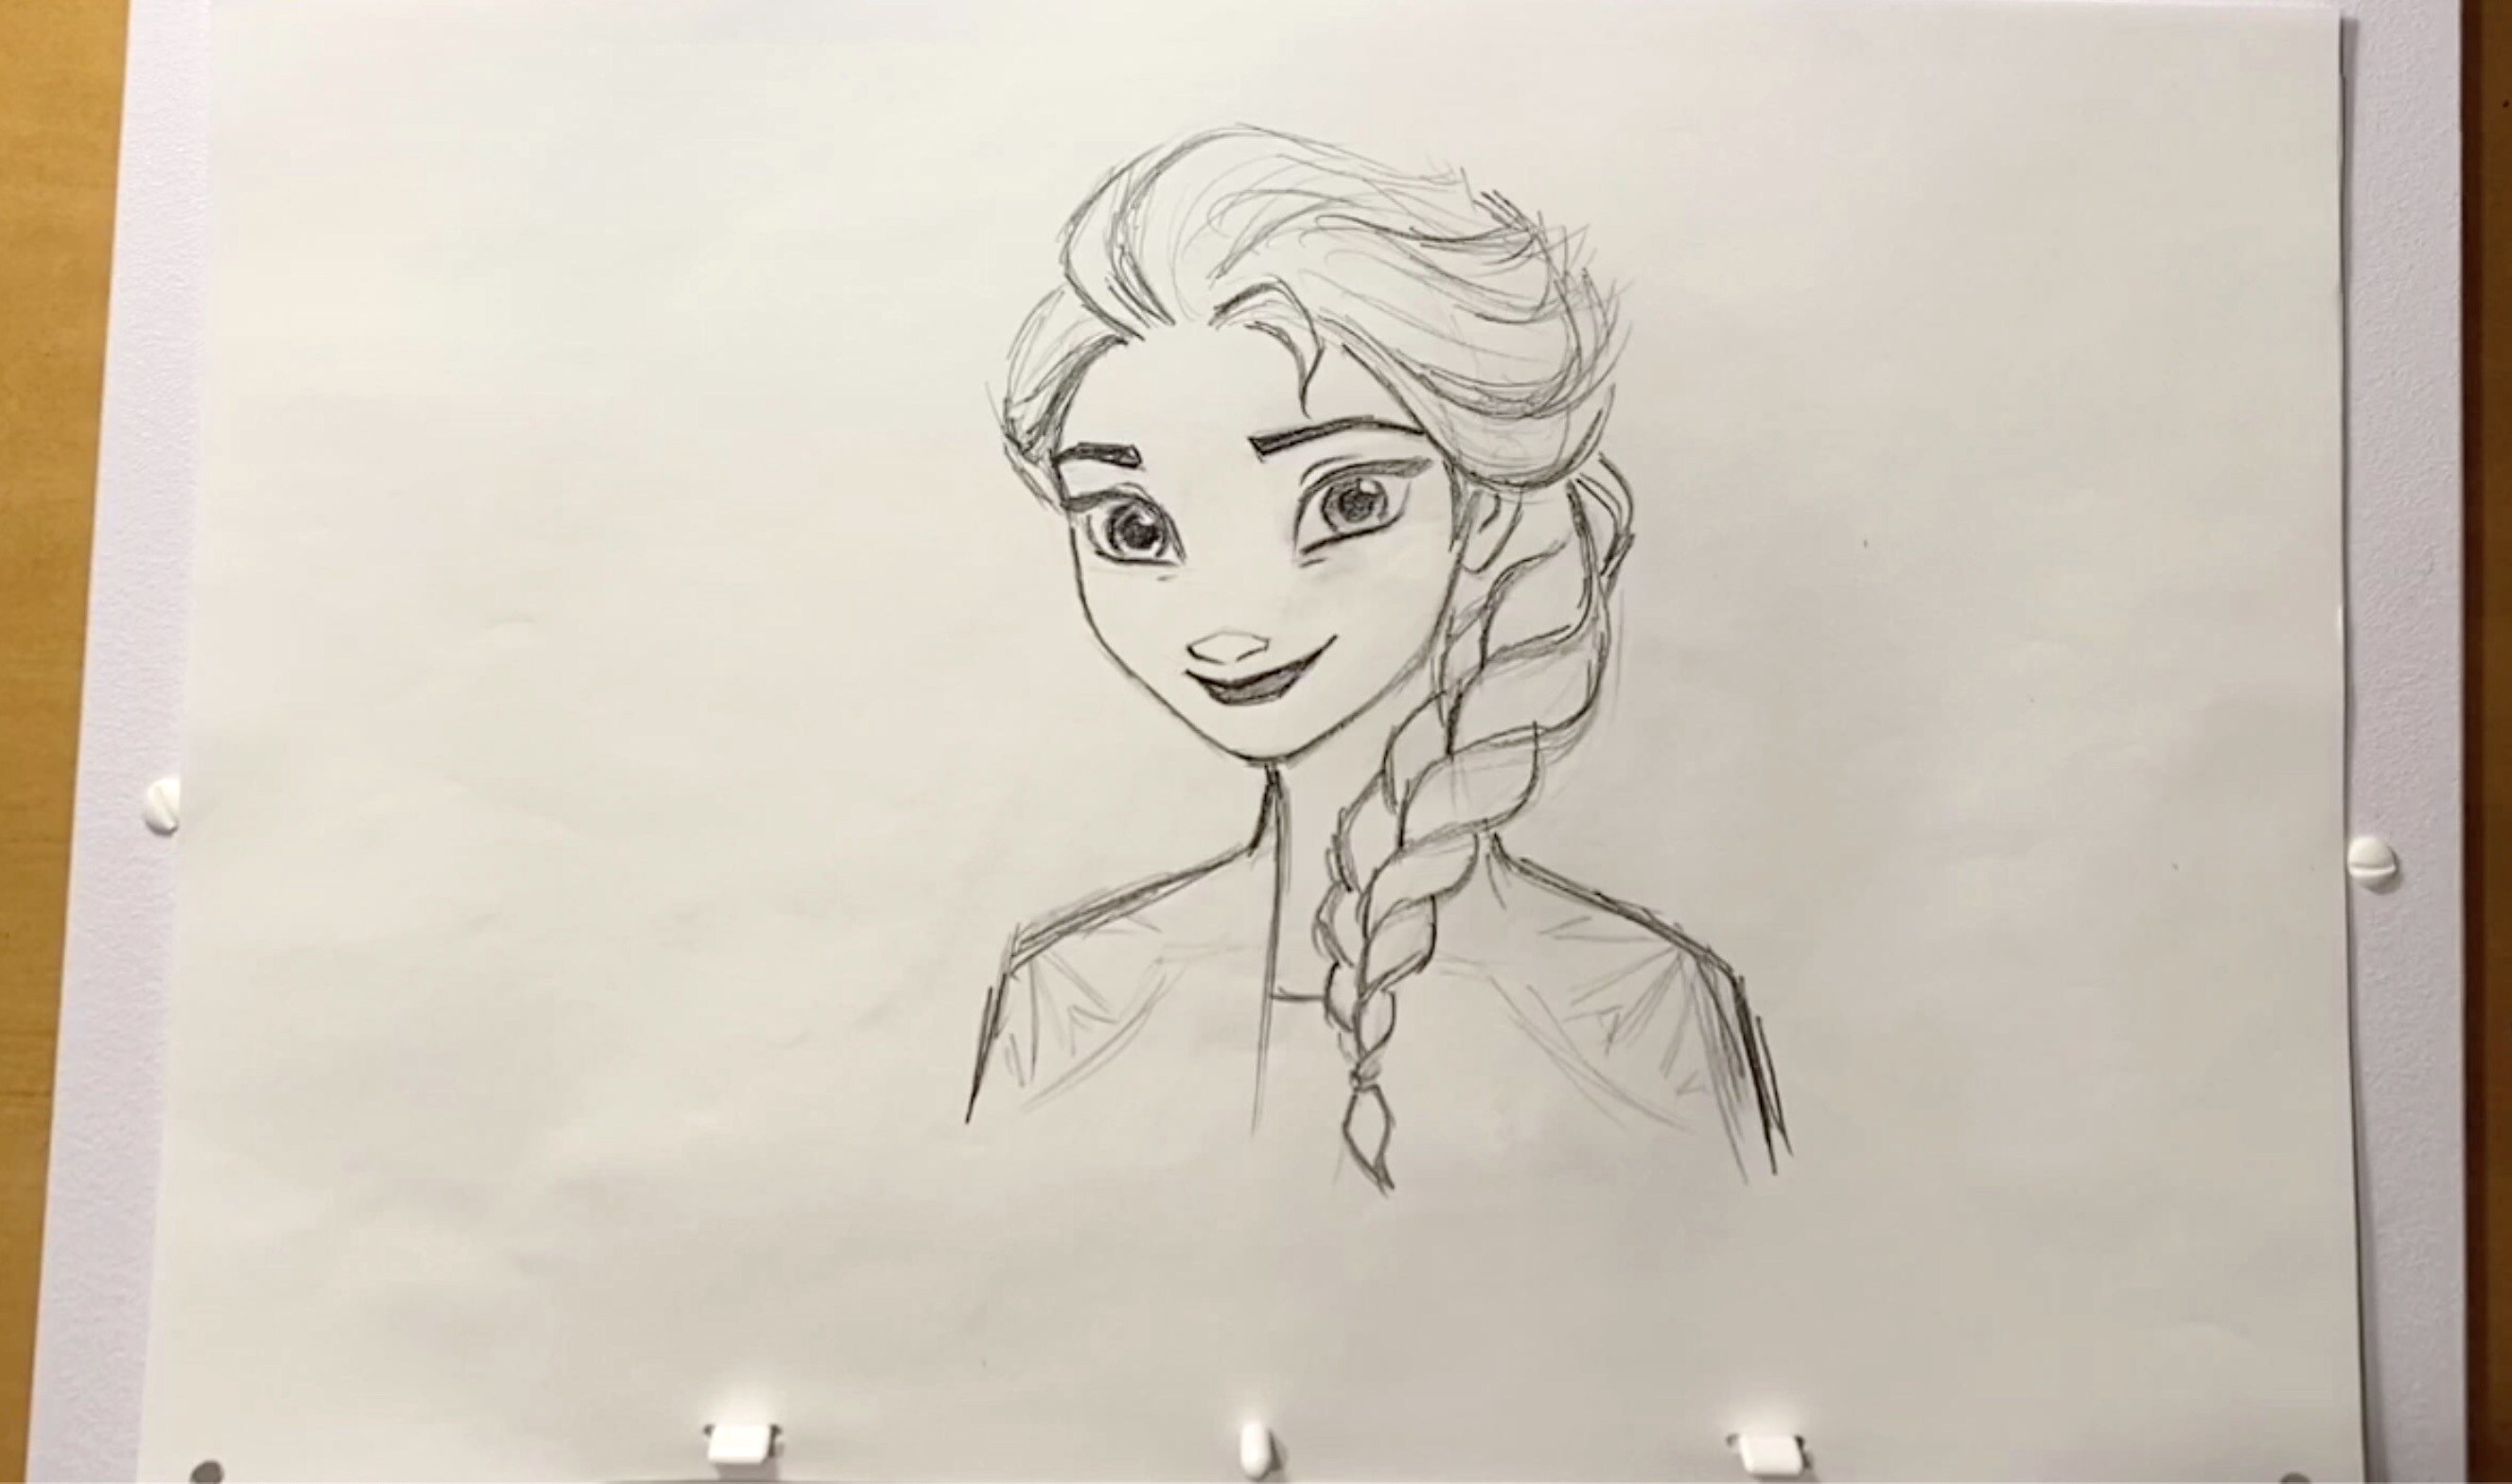 How to Draw Elsa Frozen